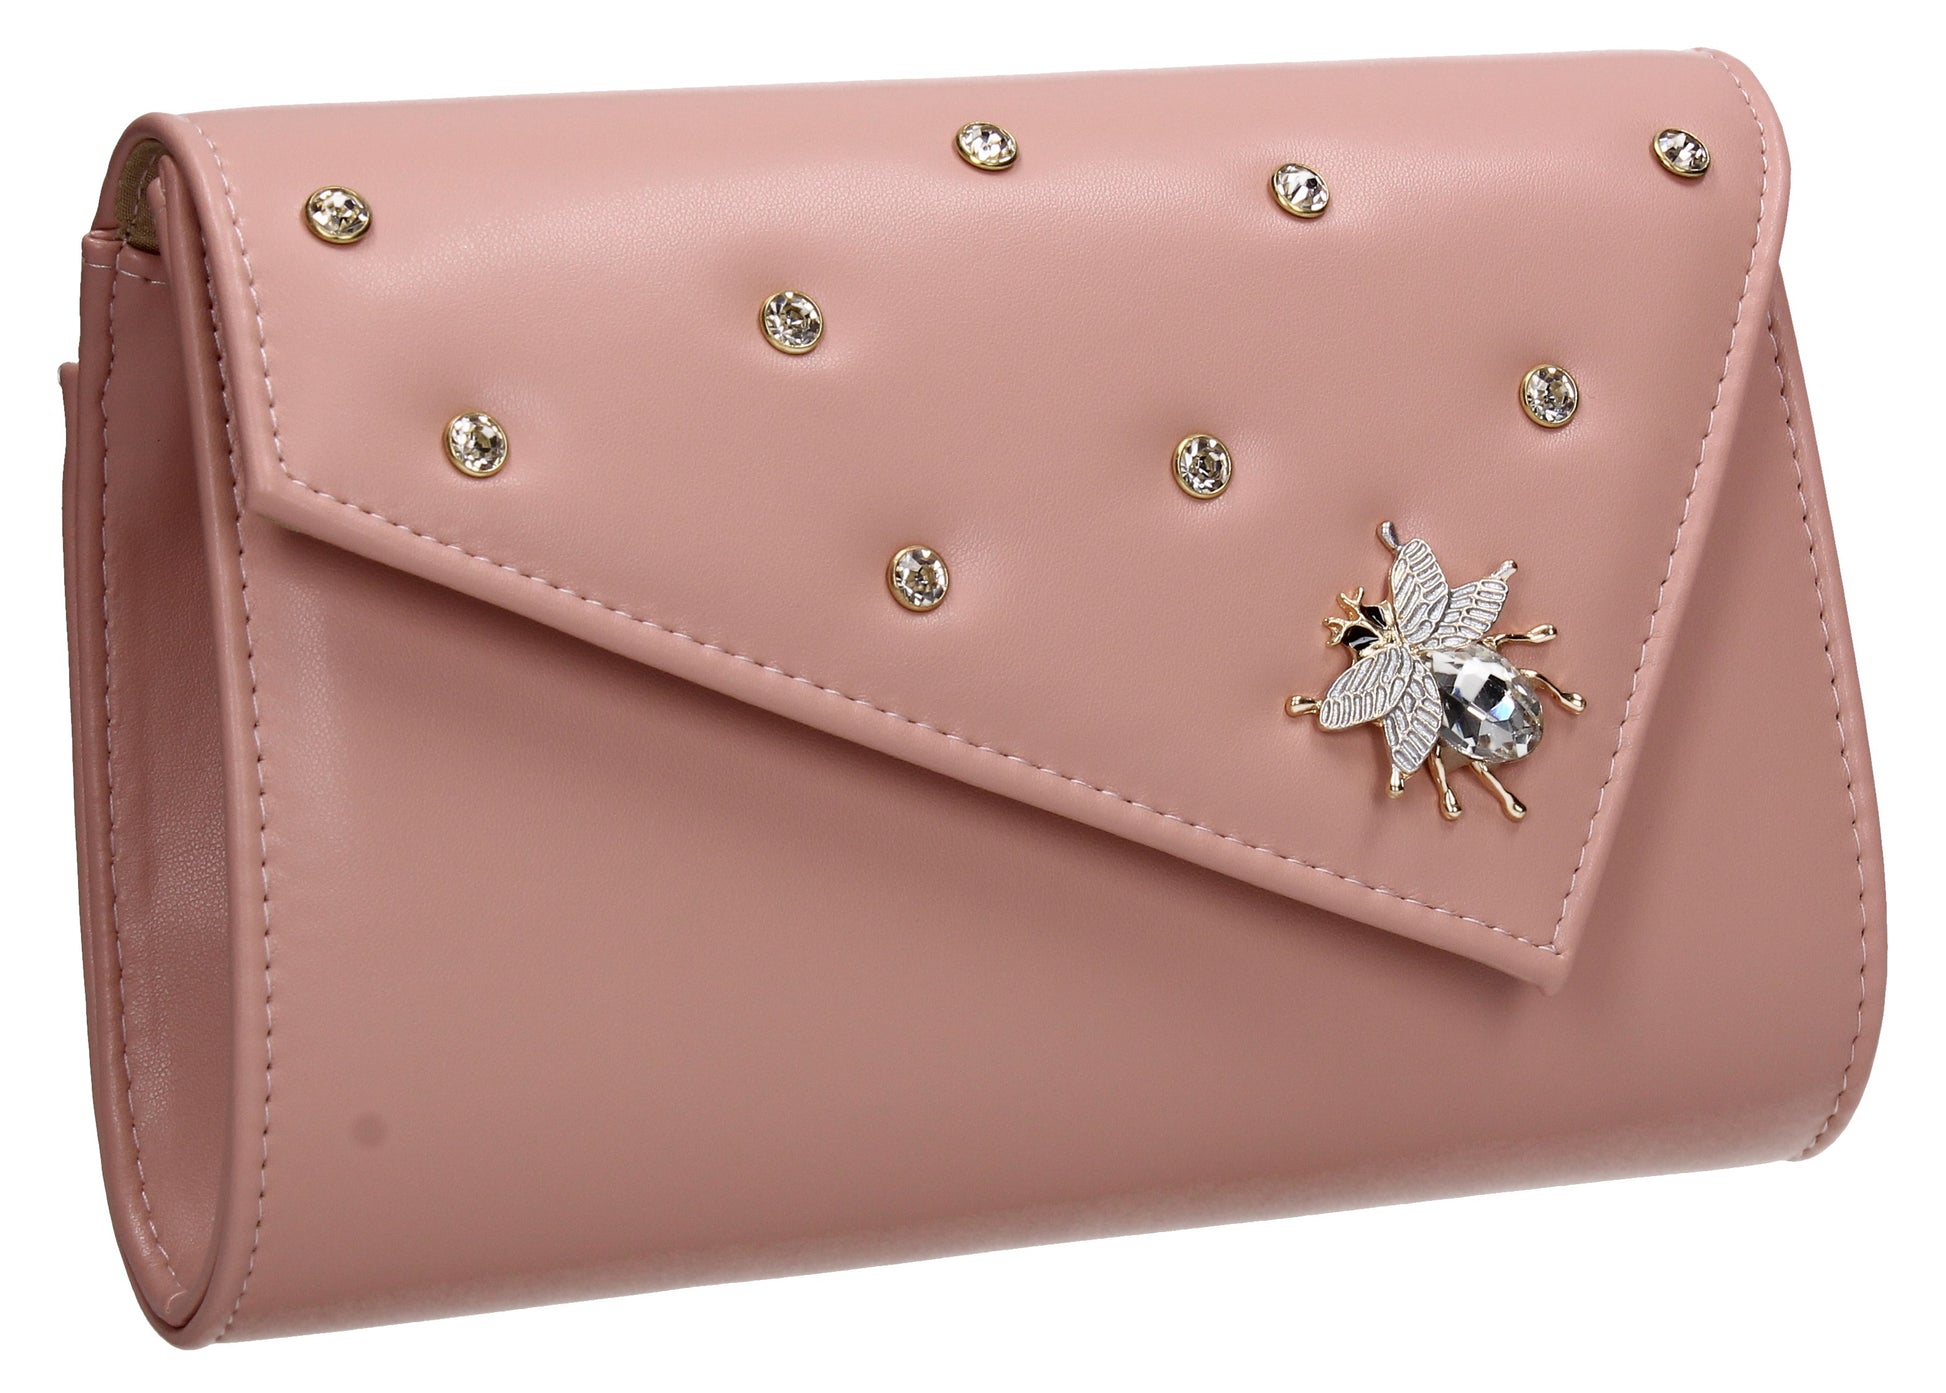 SWANKYSWANS Nylah Clutch Bag Pink Cute Cheap Clutch Bag For Weddings School and Work